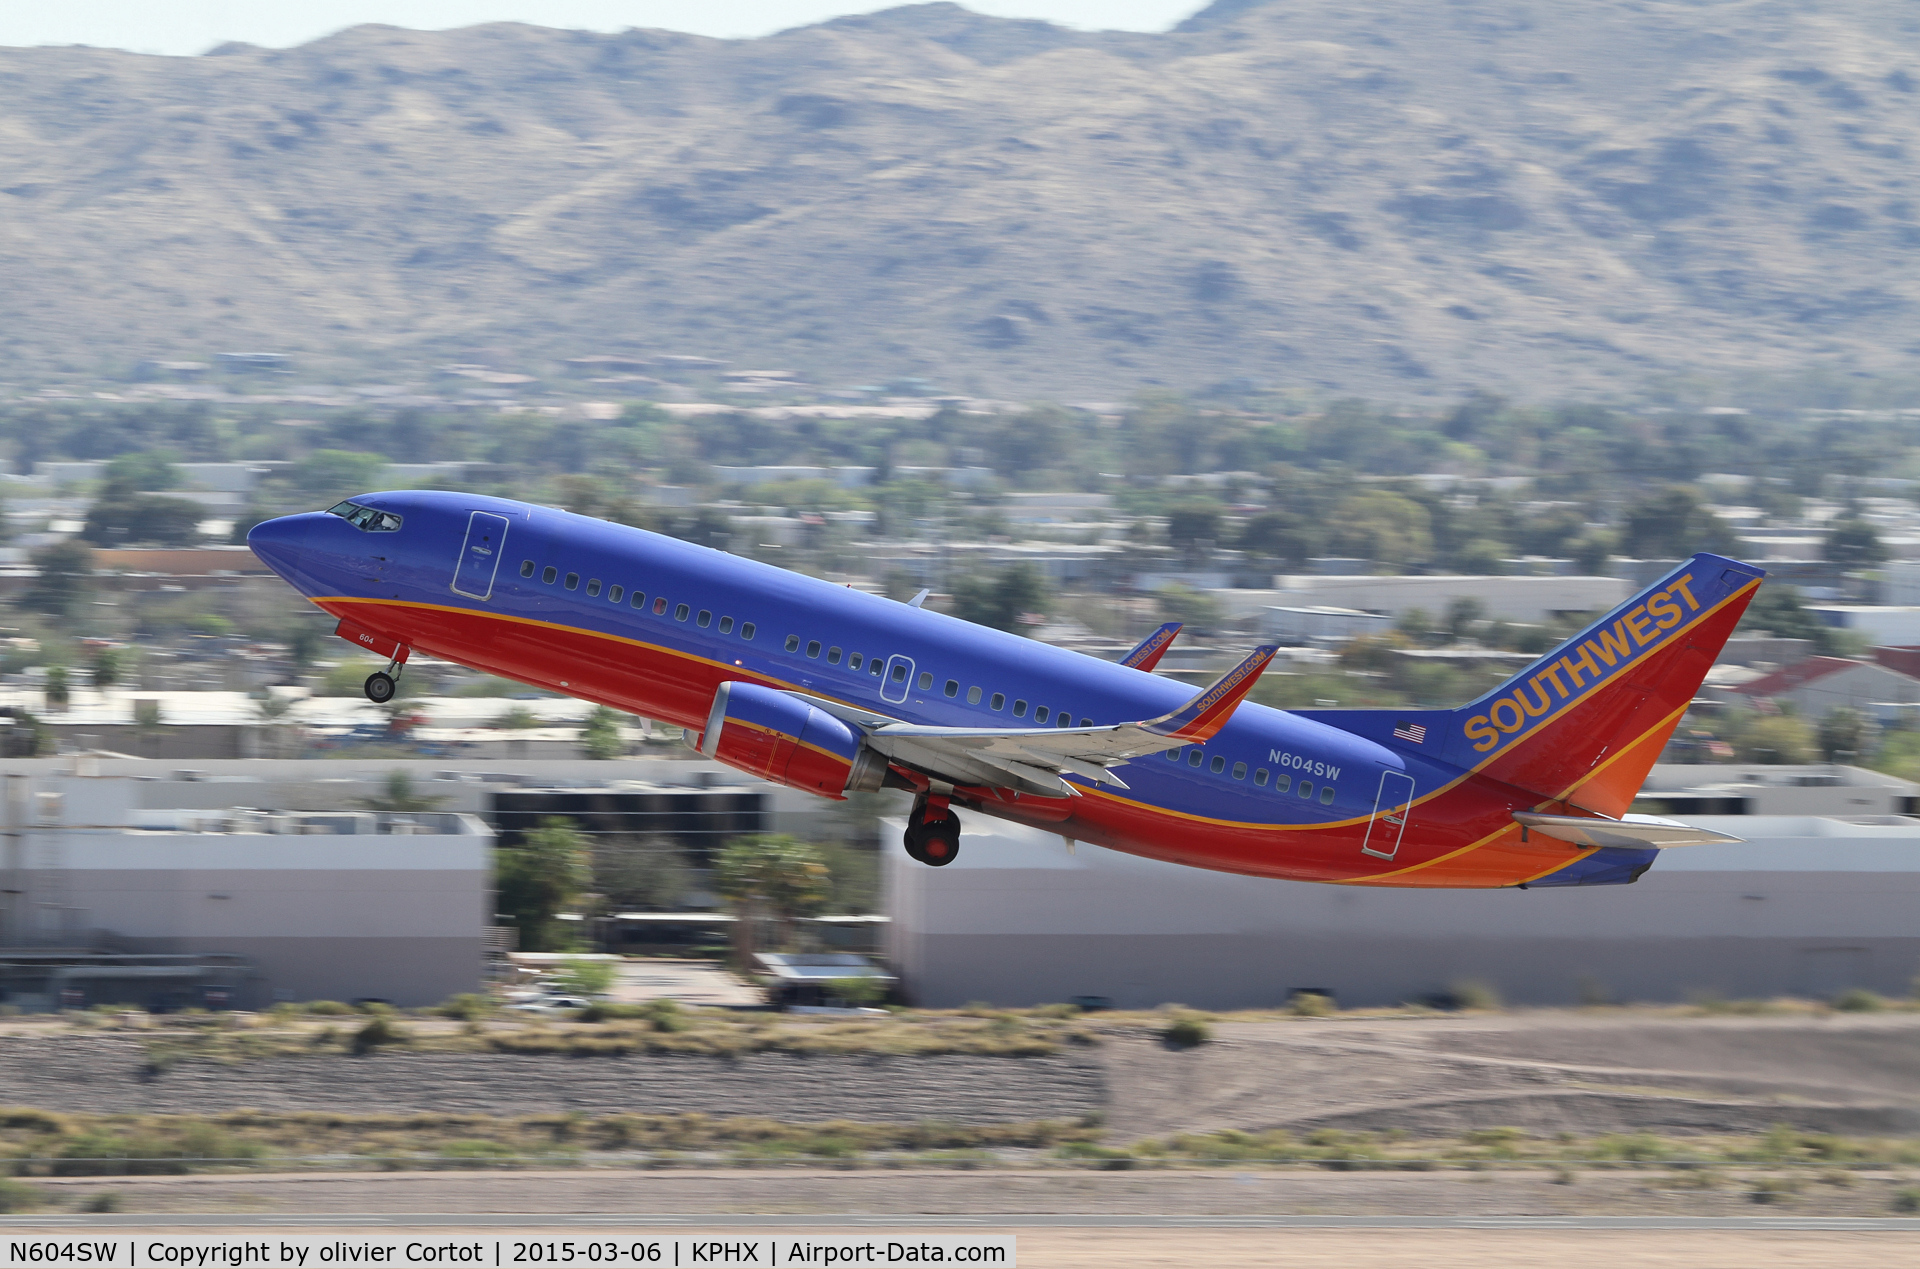 N604SW, 1995 Boeing 737-3H4 C/N 27955, taking off from Phoenix